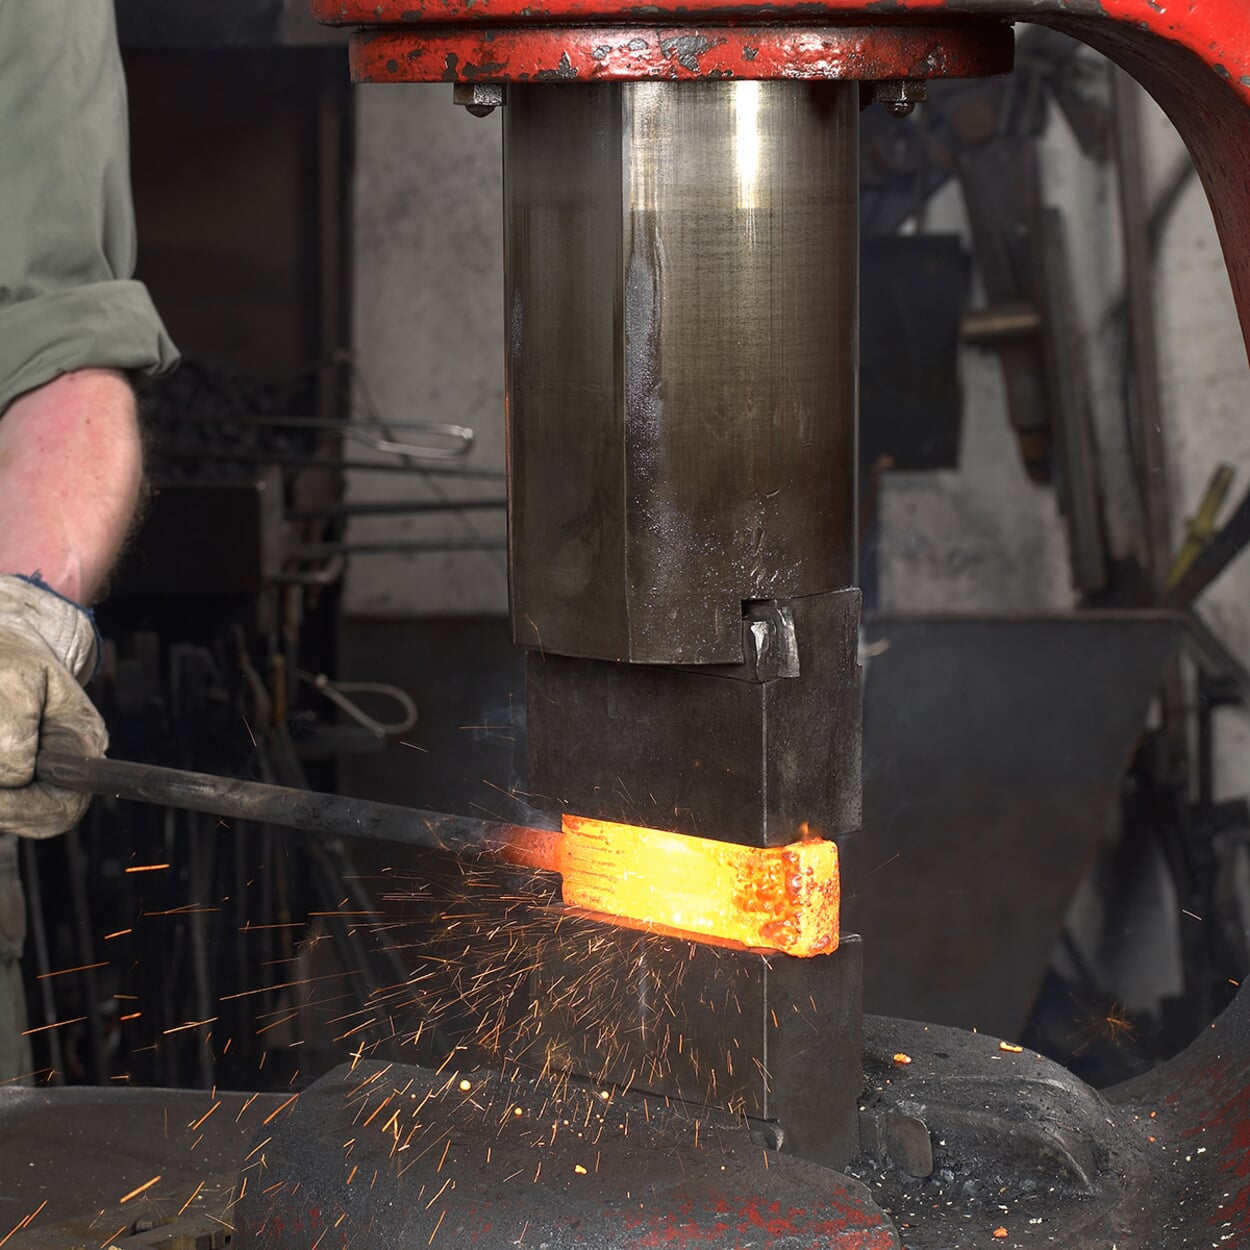 Damascus steel welding